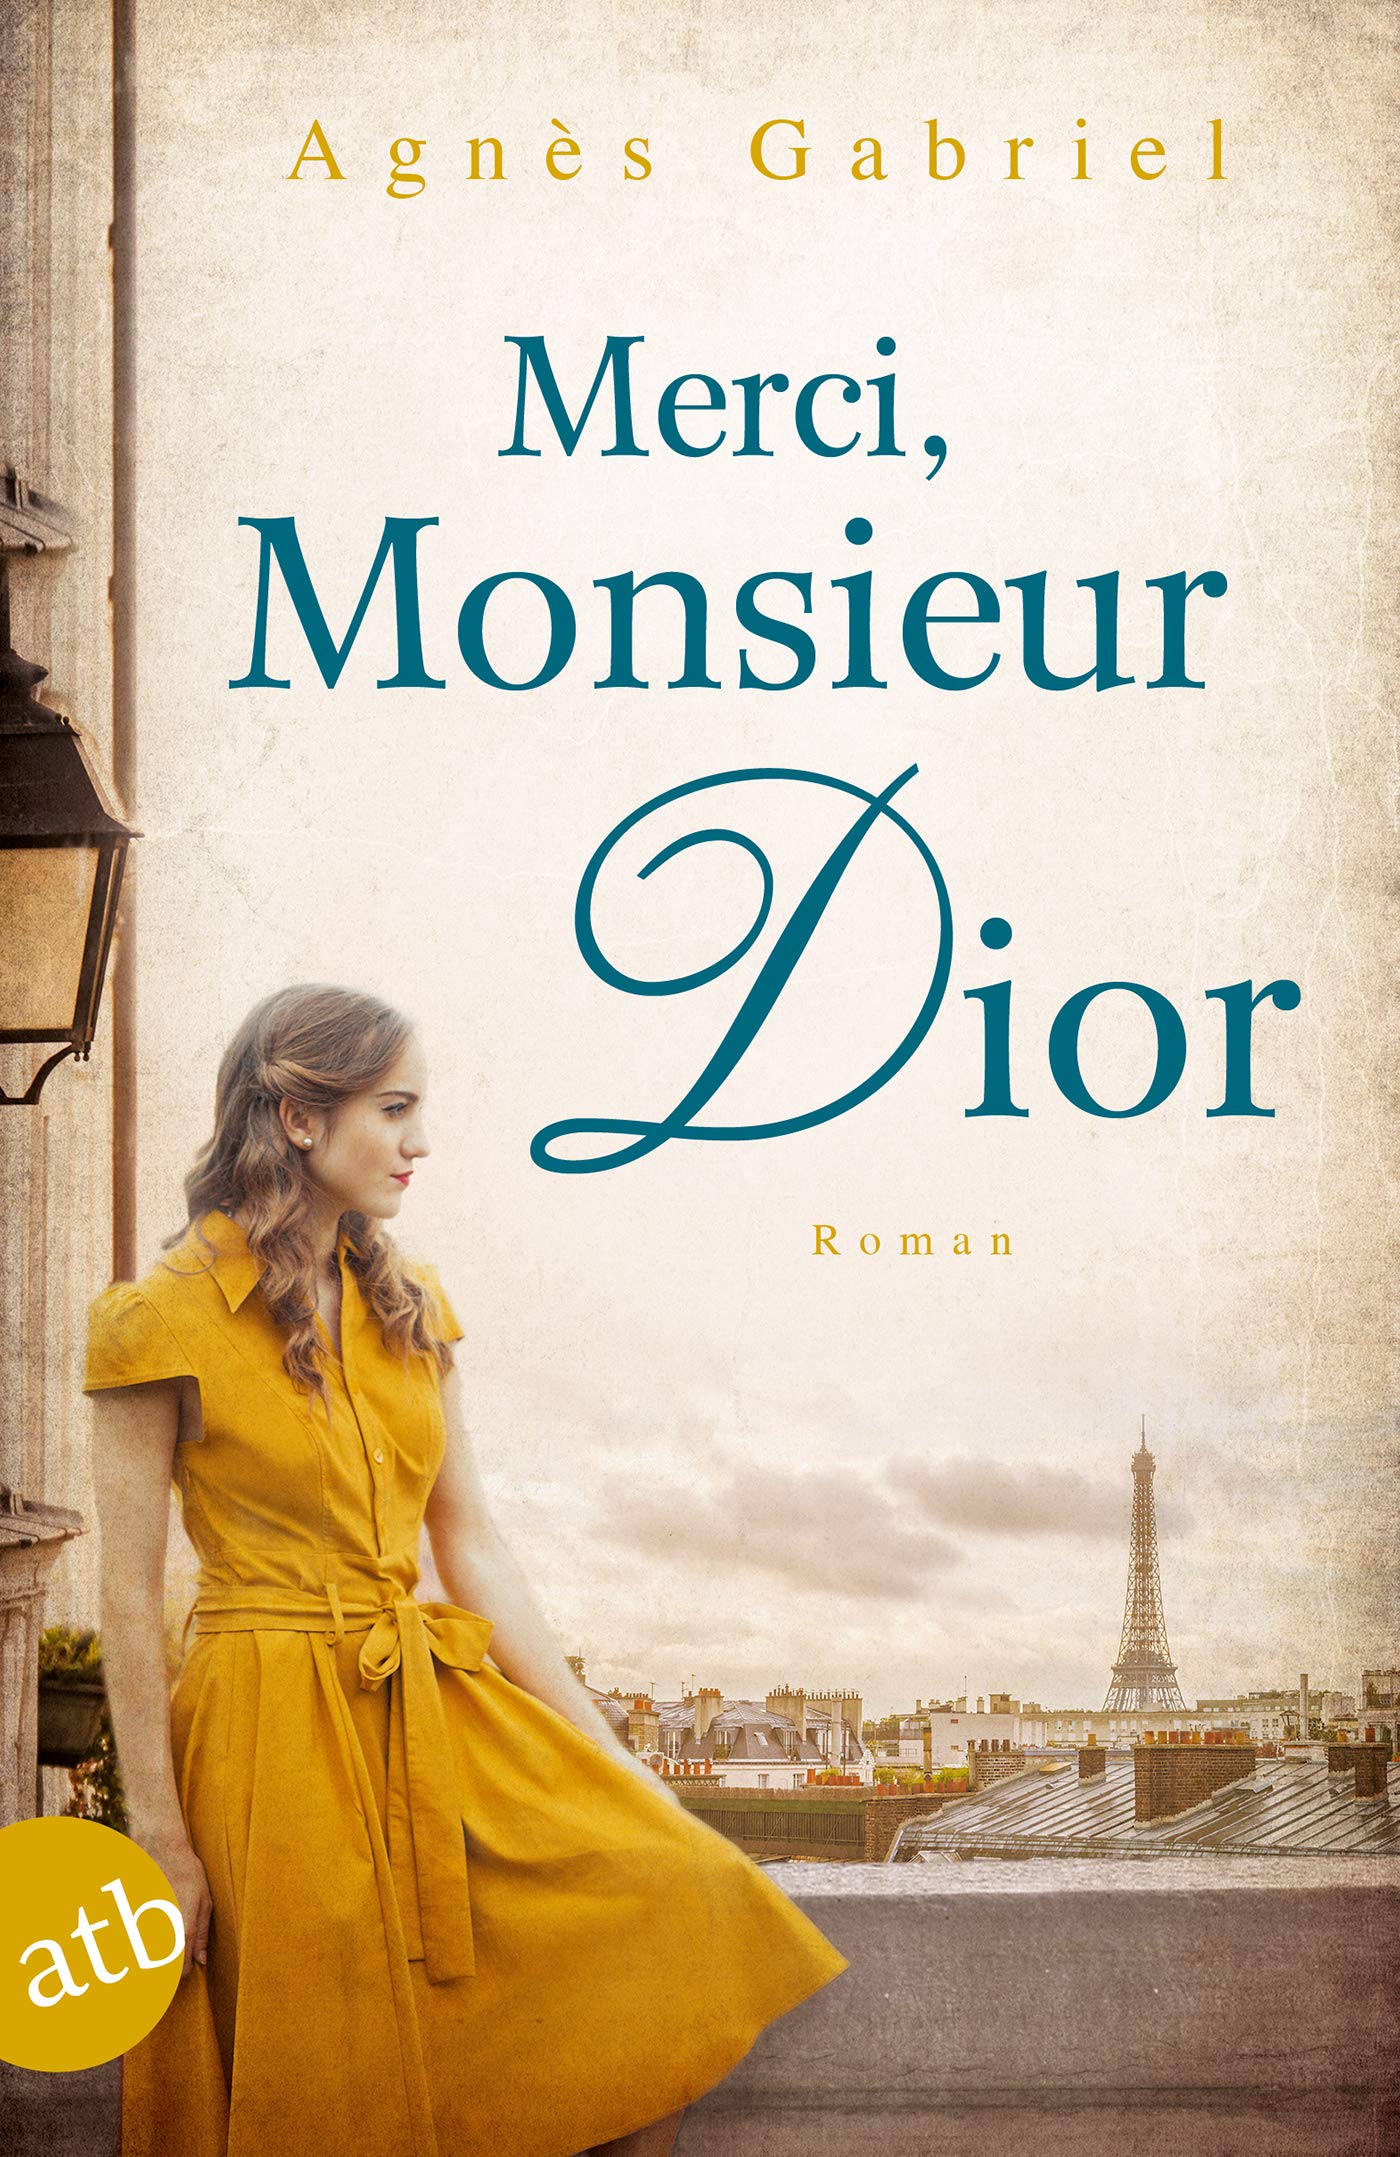 Agnes Gabriel, Marci, Monsieur Dior